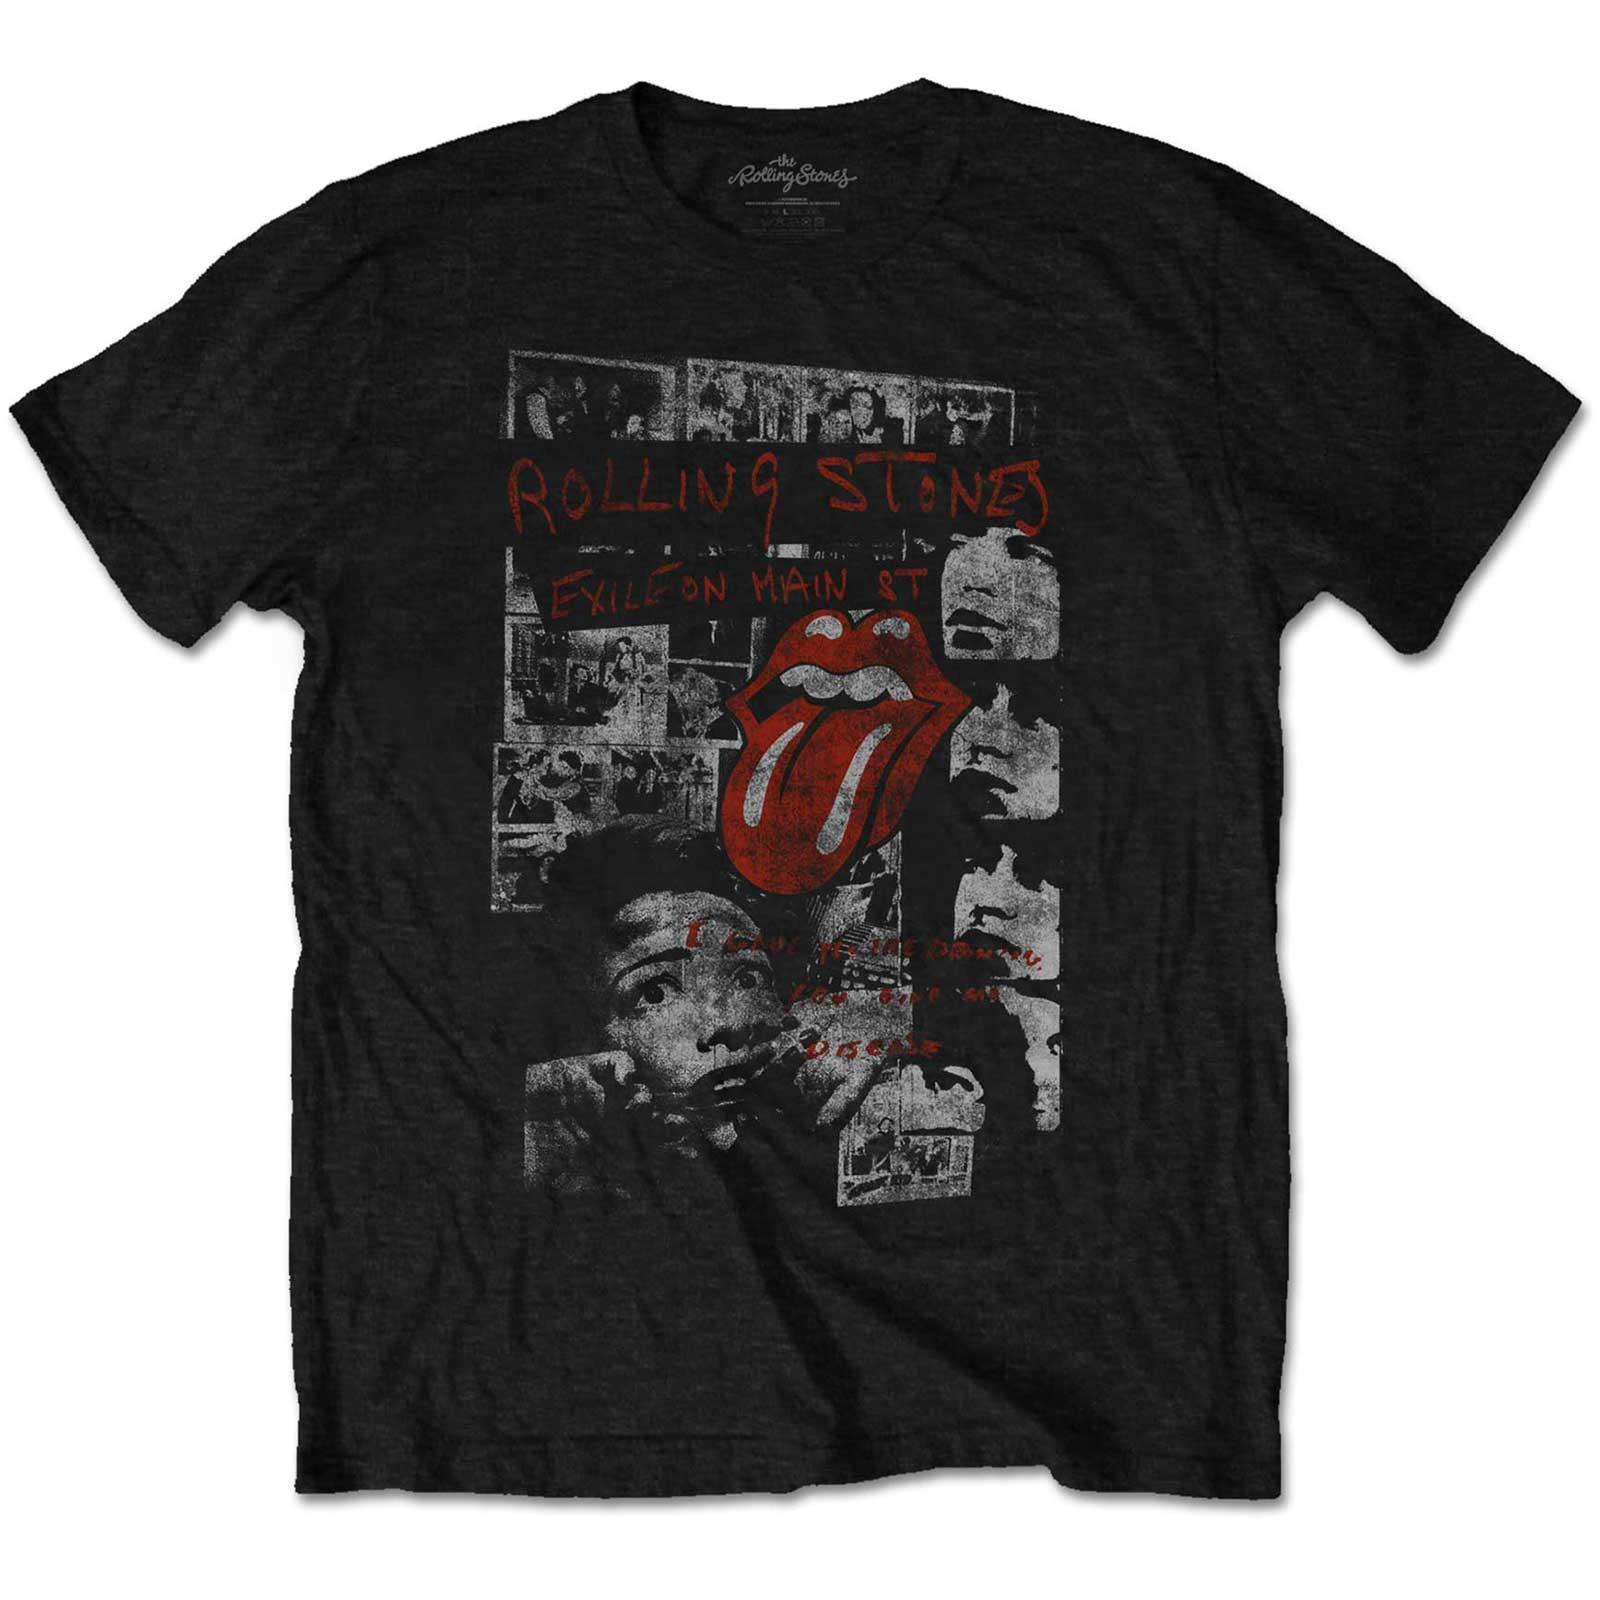 The Rolling Stones Unisex Adult Elite Faded Cotton T-Shirt (Black) (XXL)